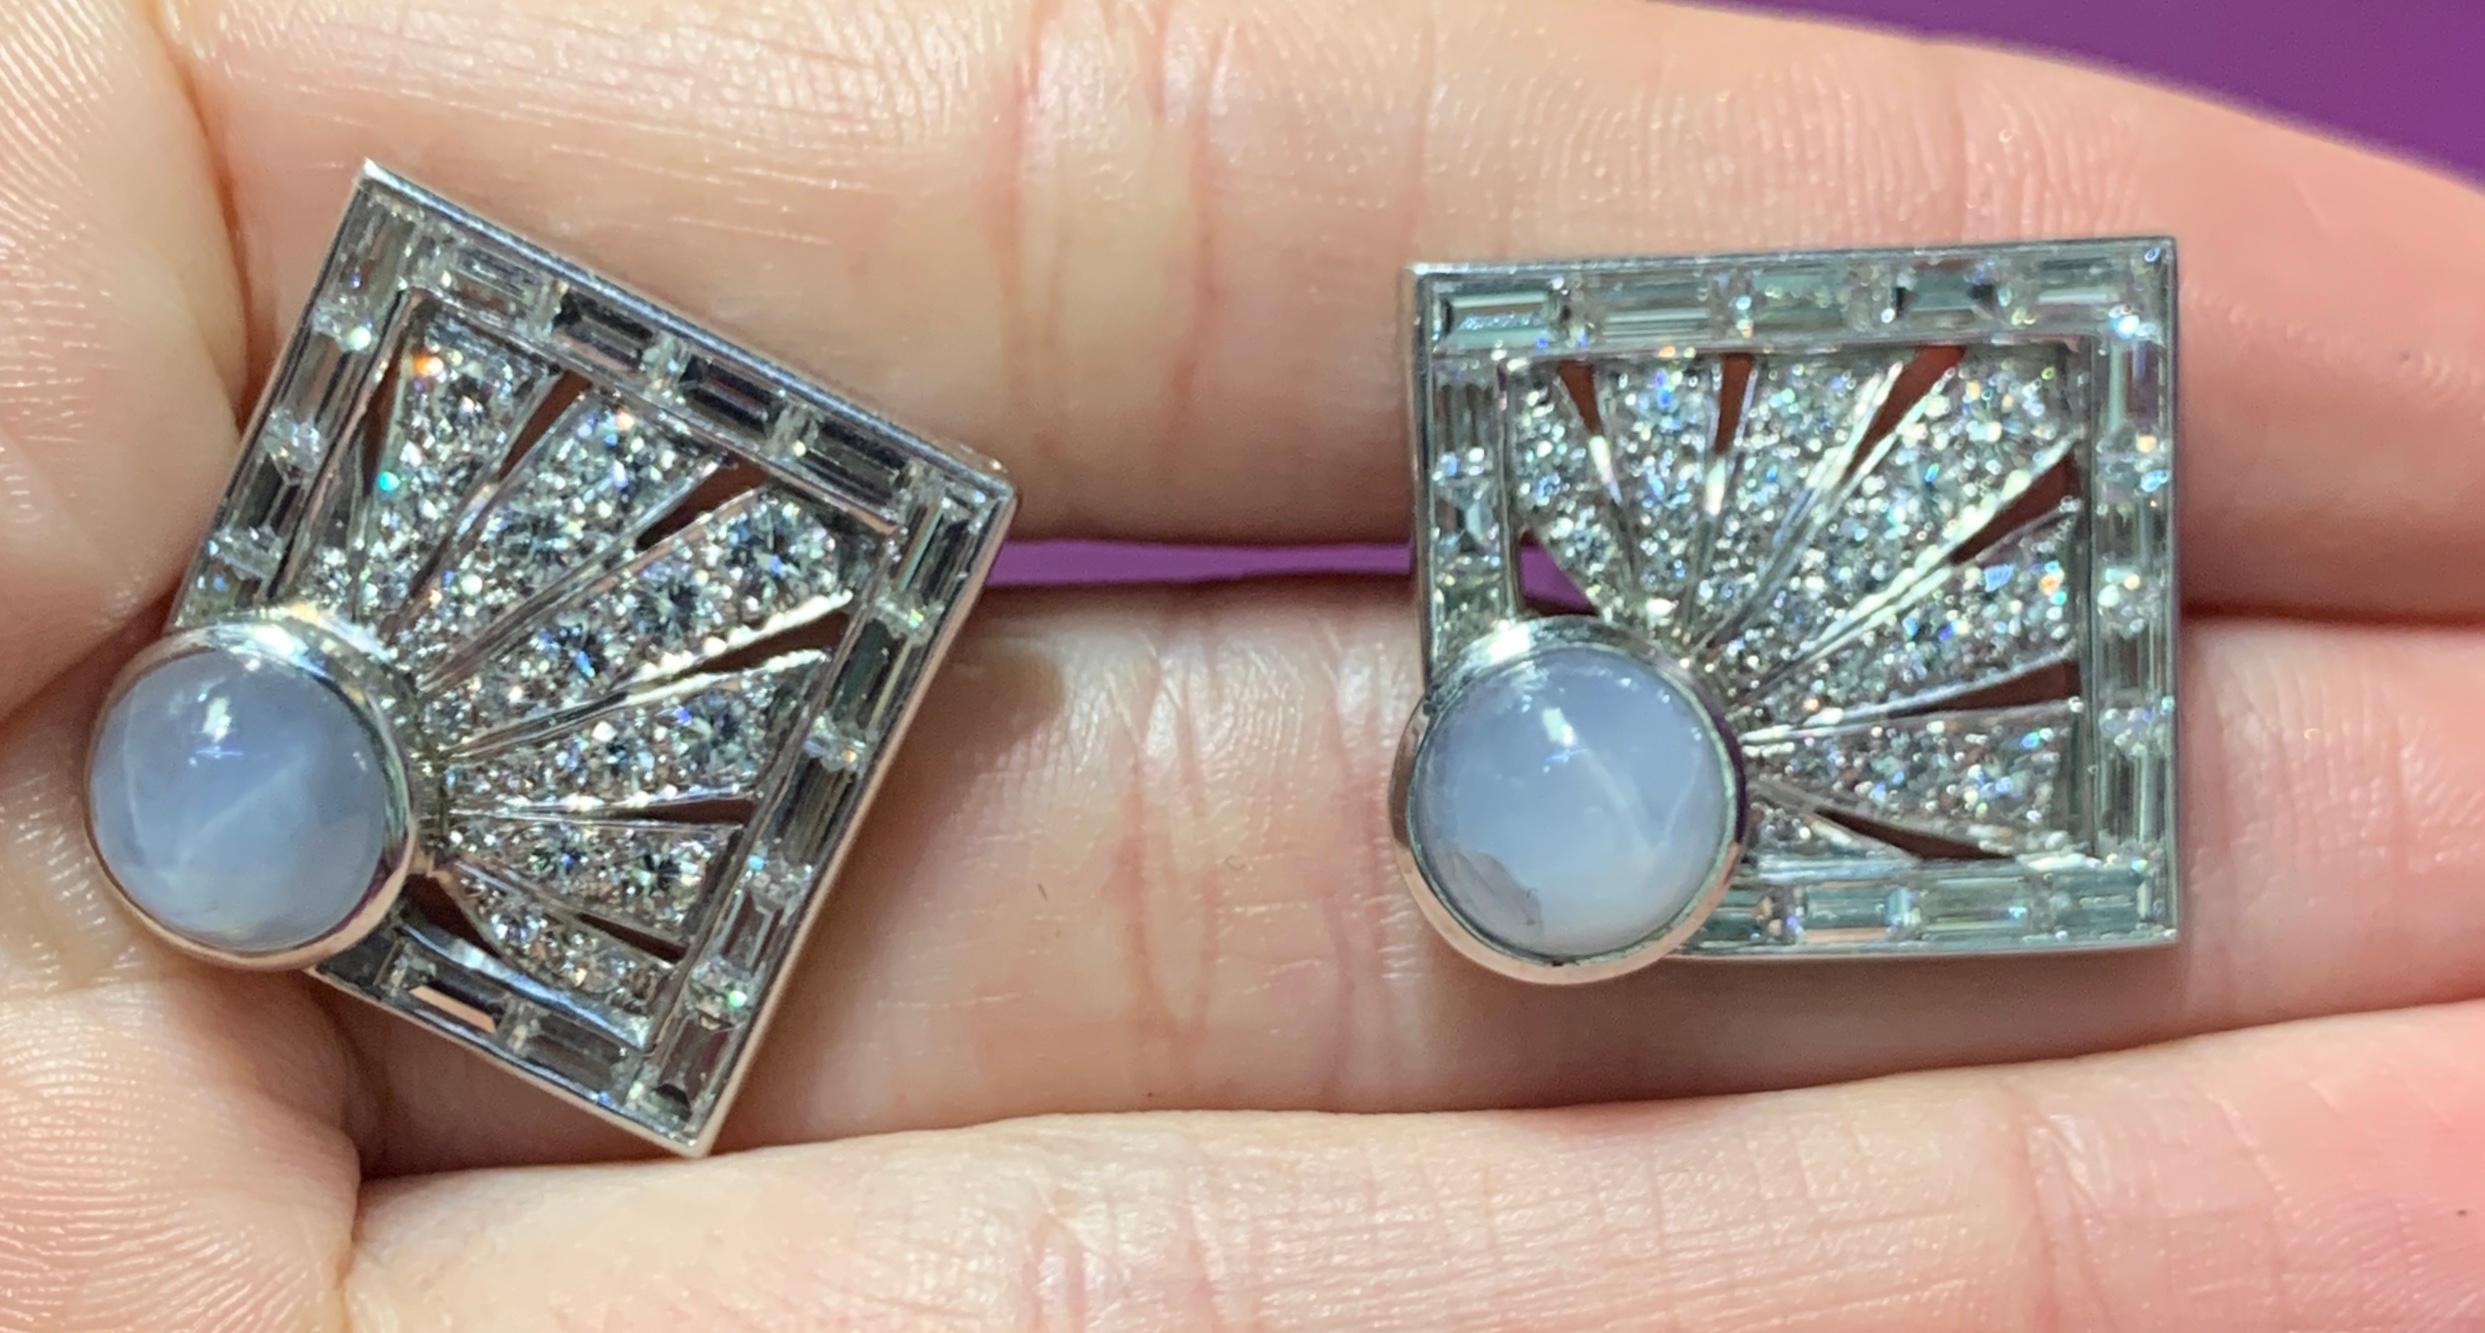 Star Sapphire & Diamond Square Cufflinks
44 round cut diamonds 
32 baguette cut diamonds 
2 star sapphires
Measurements: .75